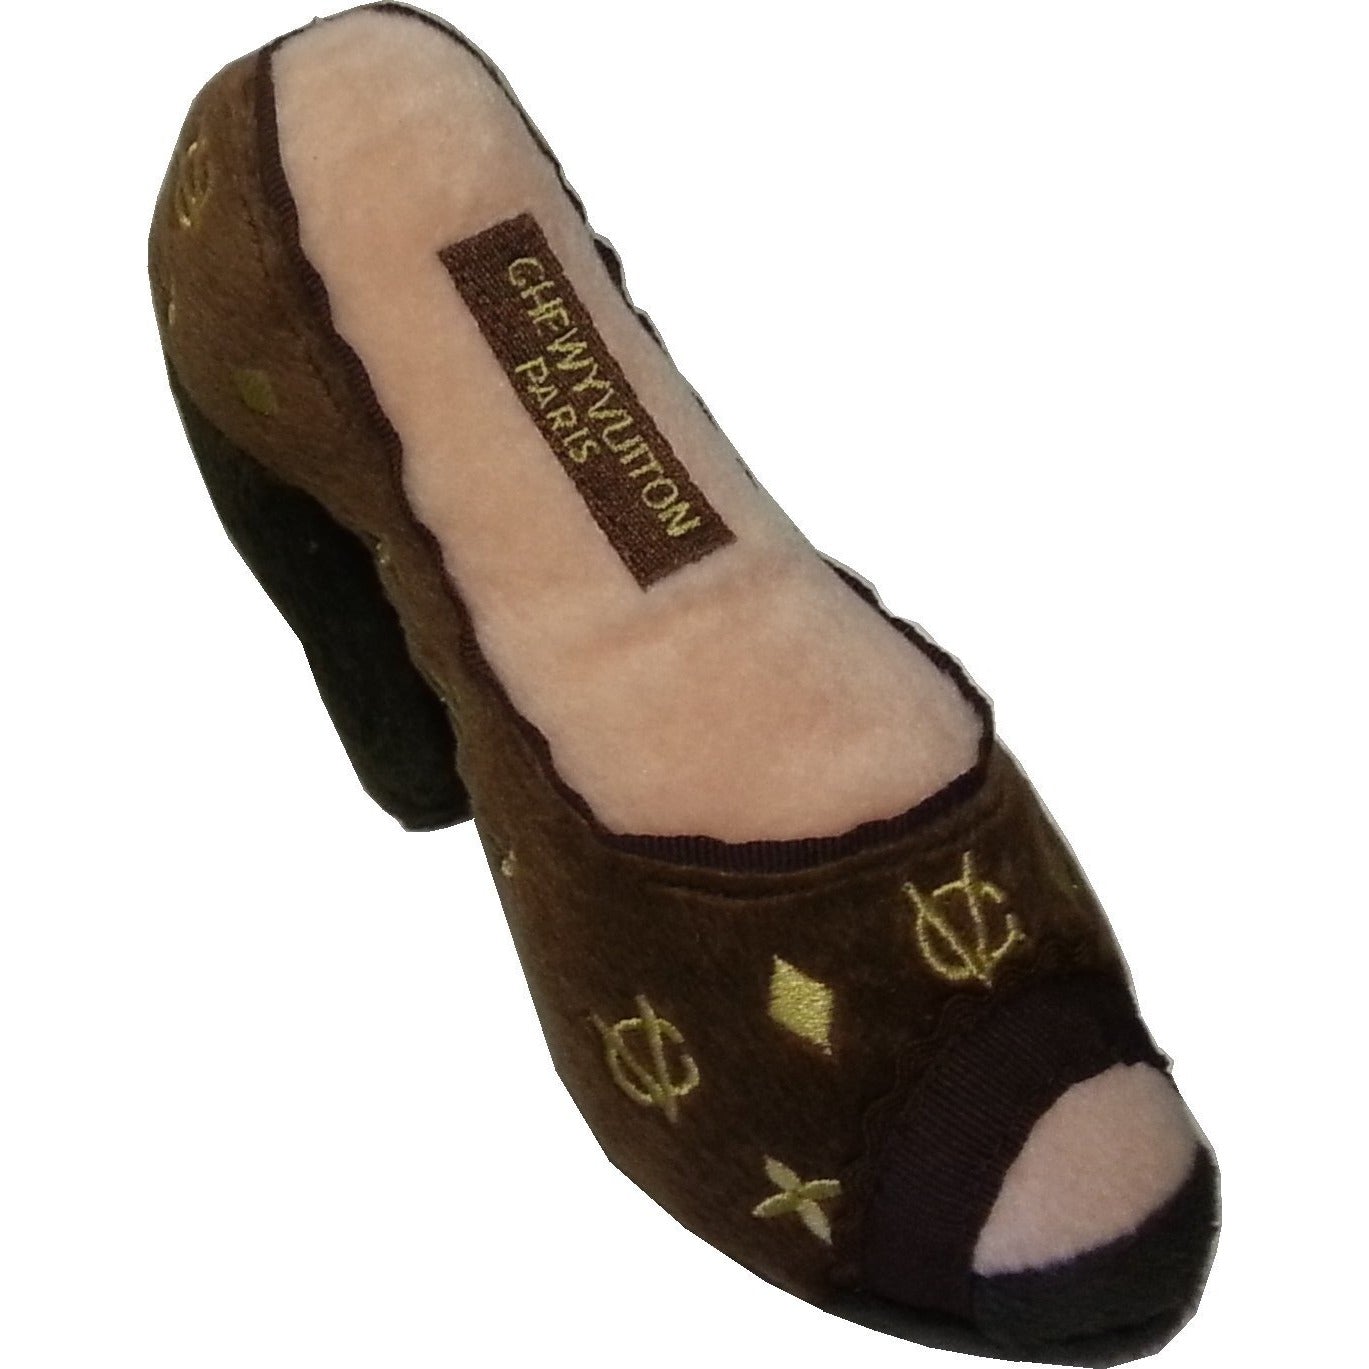 Chewy Vuiton Shoe - Pooch Luxury